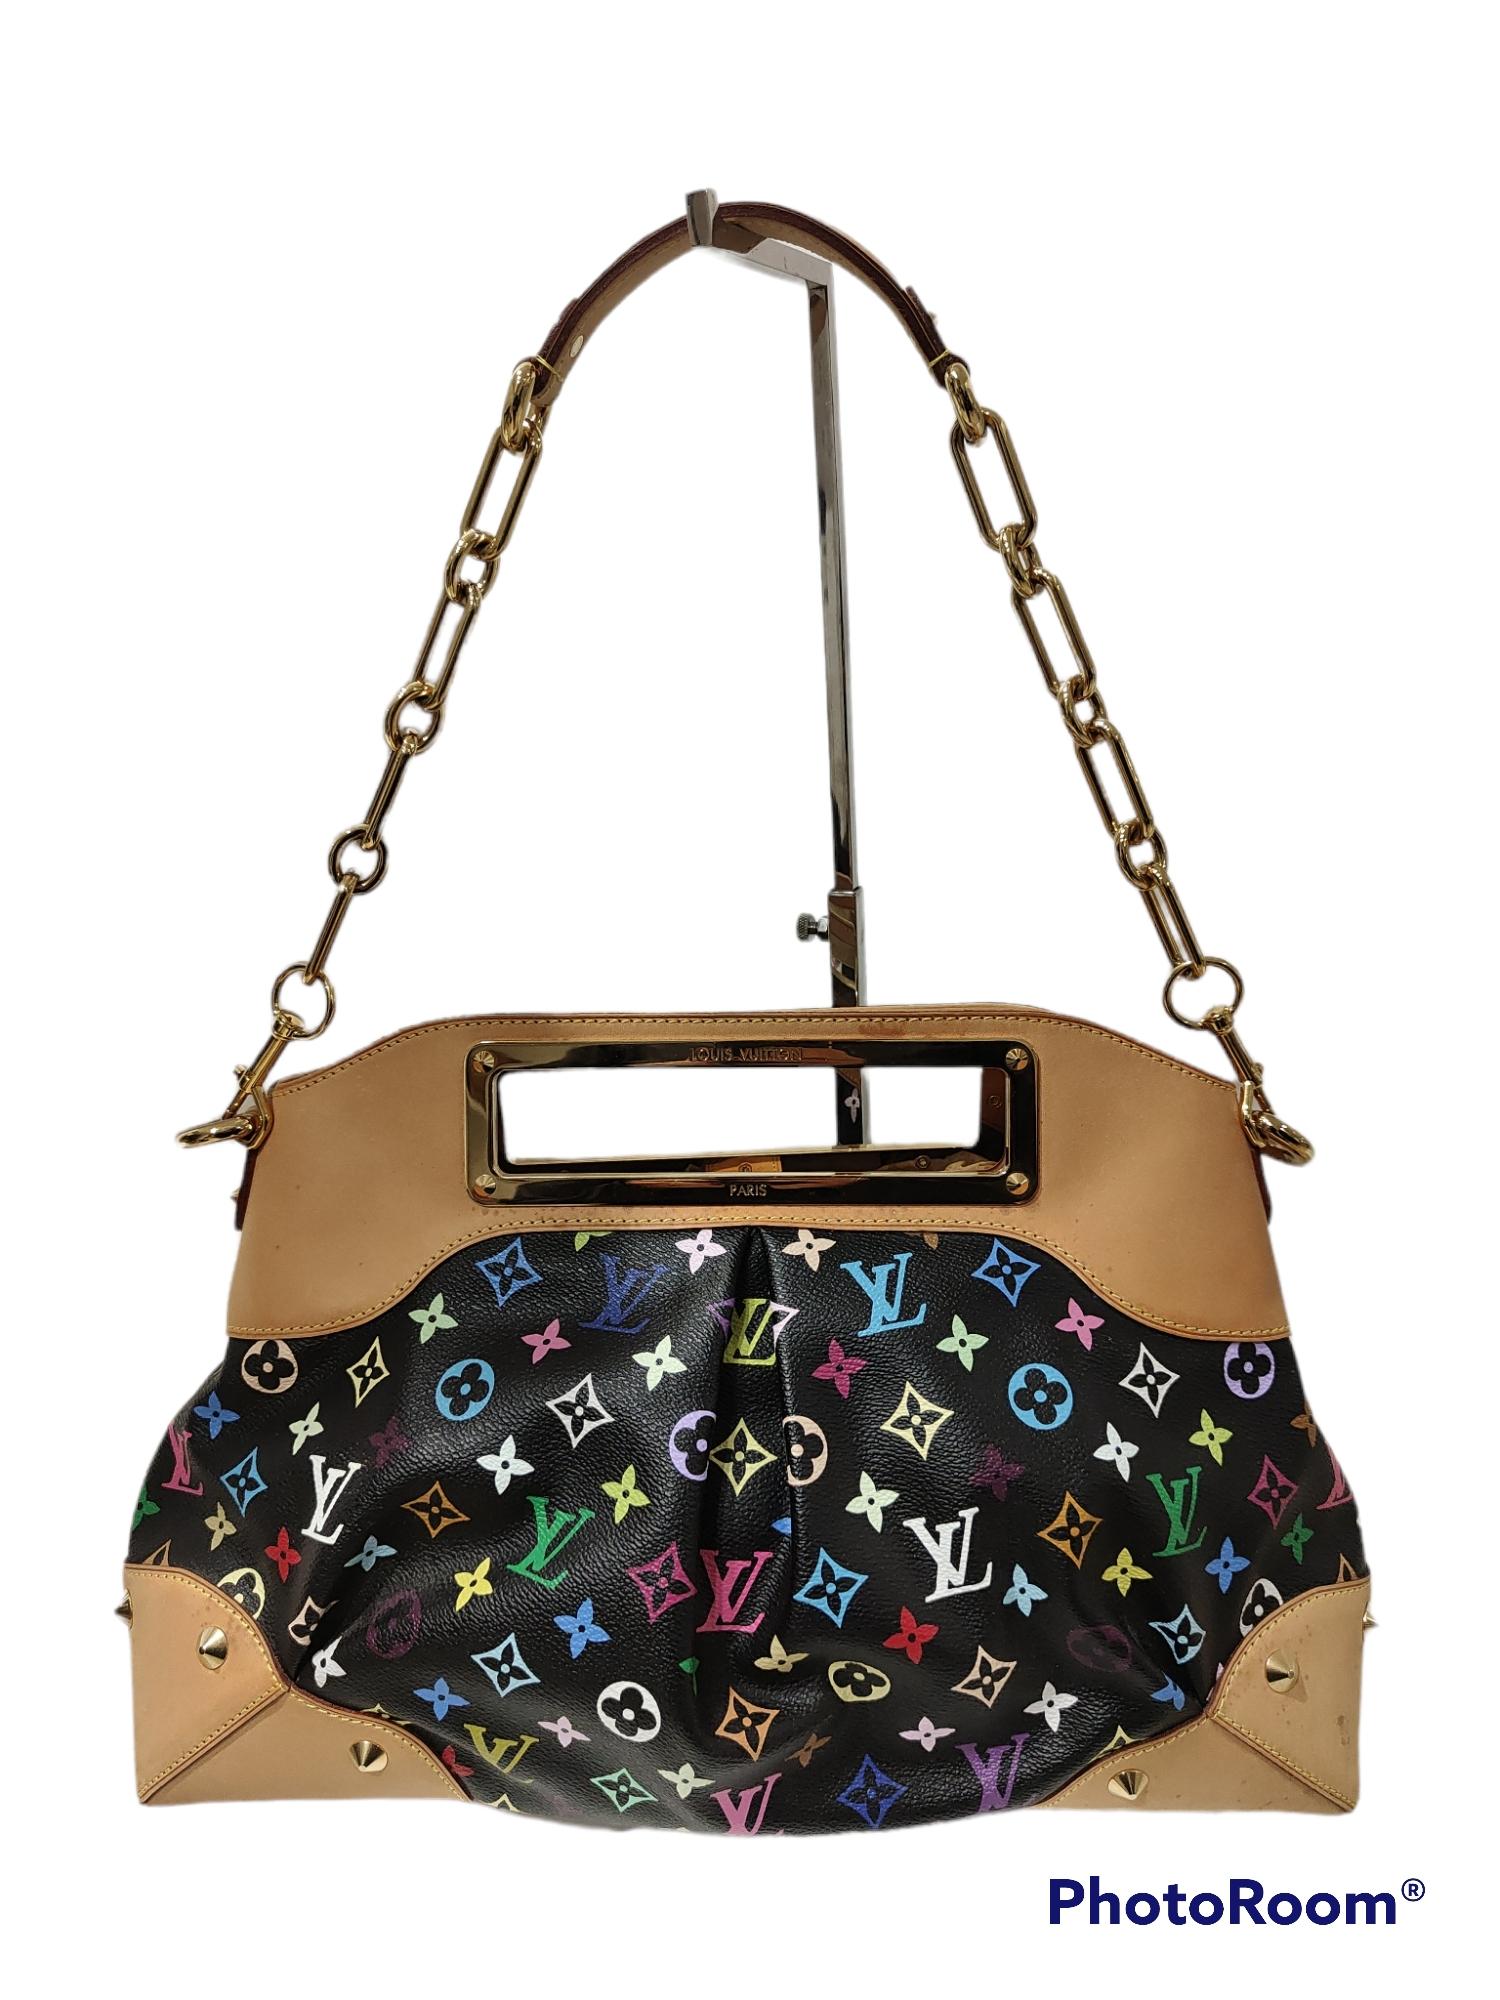 Louis Vuitton Judy black multicoloured logo Shoulder bag
45 x 51 cm
depth 12 